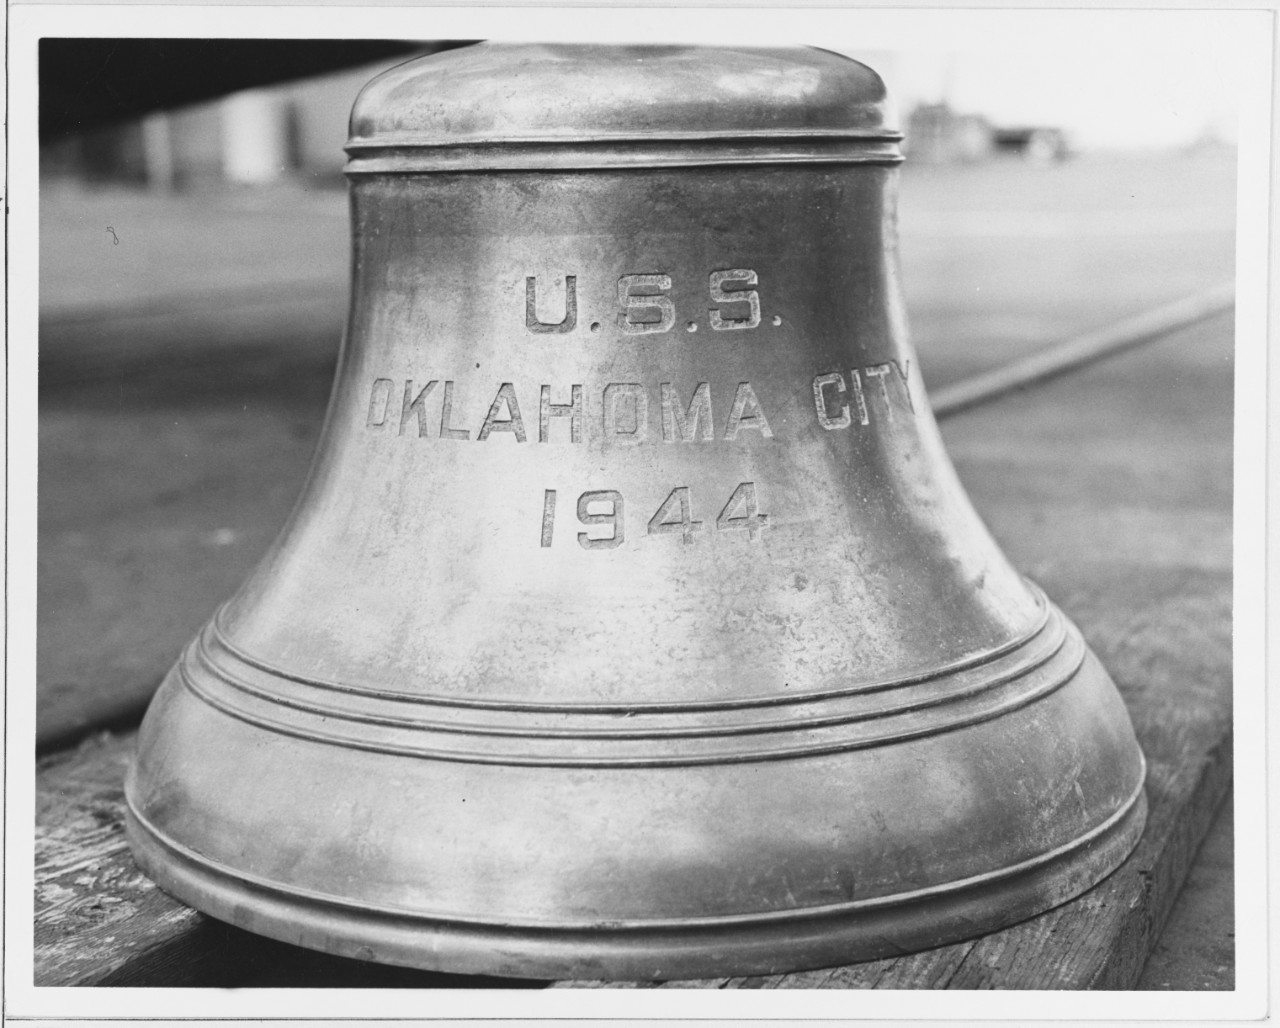 Bell, USS OKLAHOMA CITY